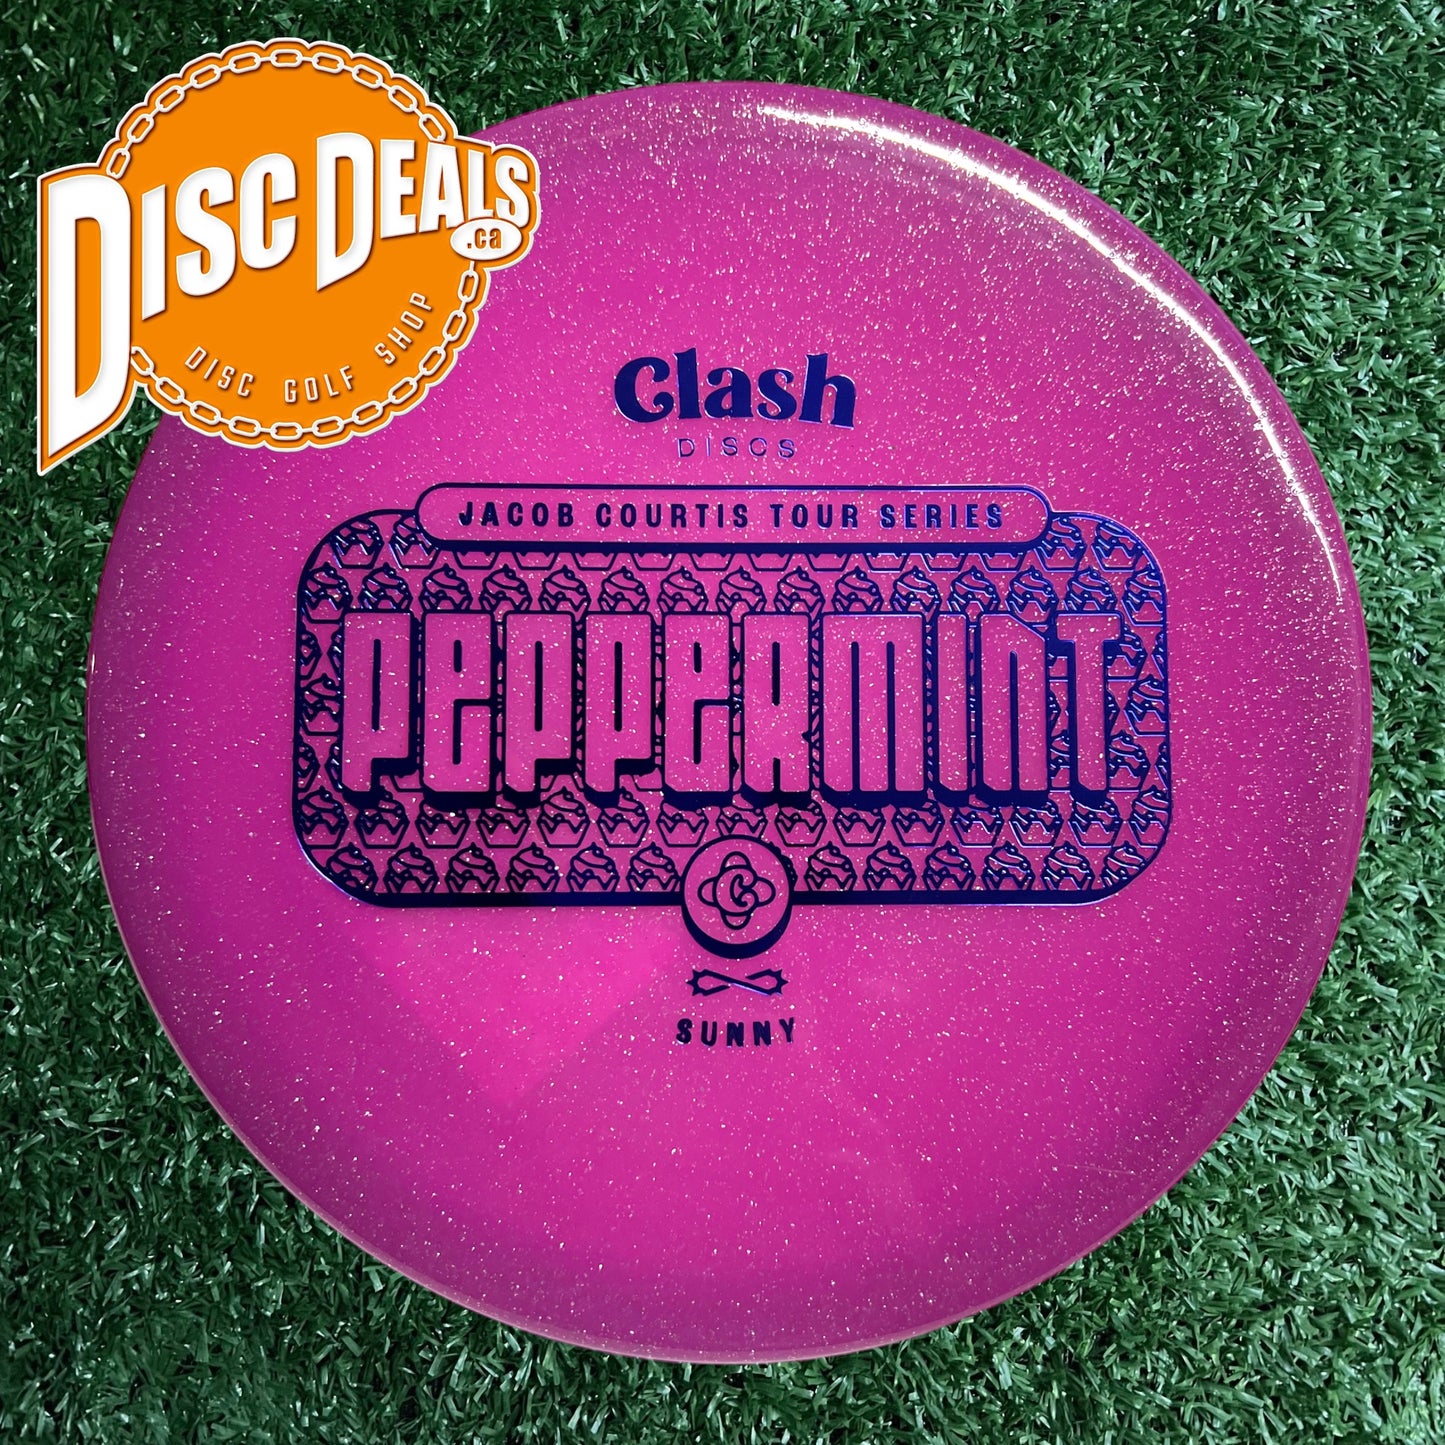 Clash Discs Peppermint - Sunny - Jacob Courtis Tour Series